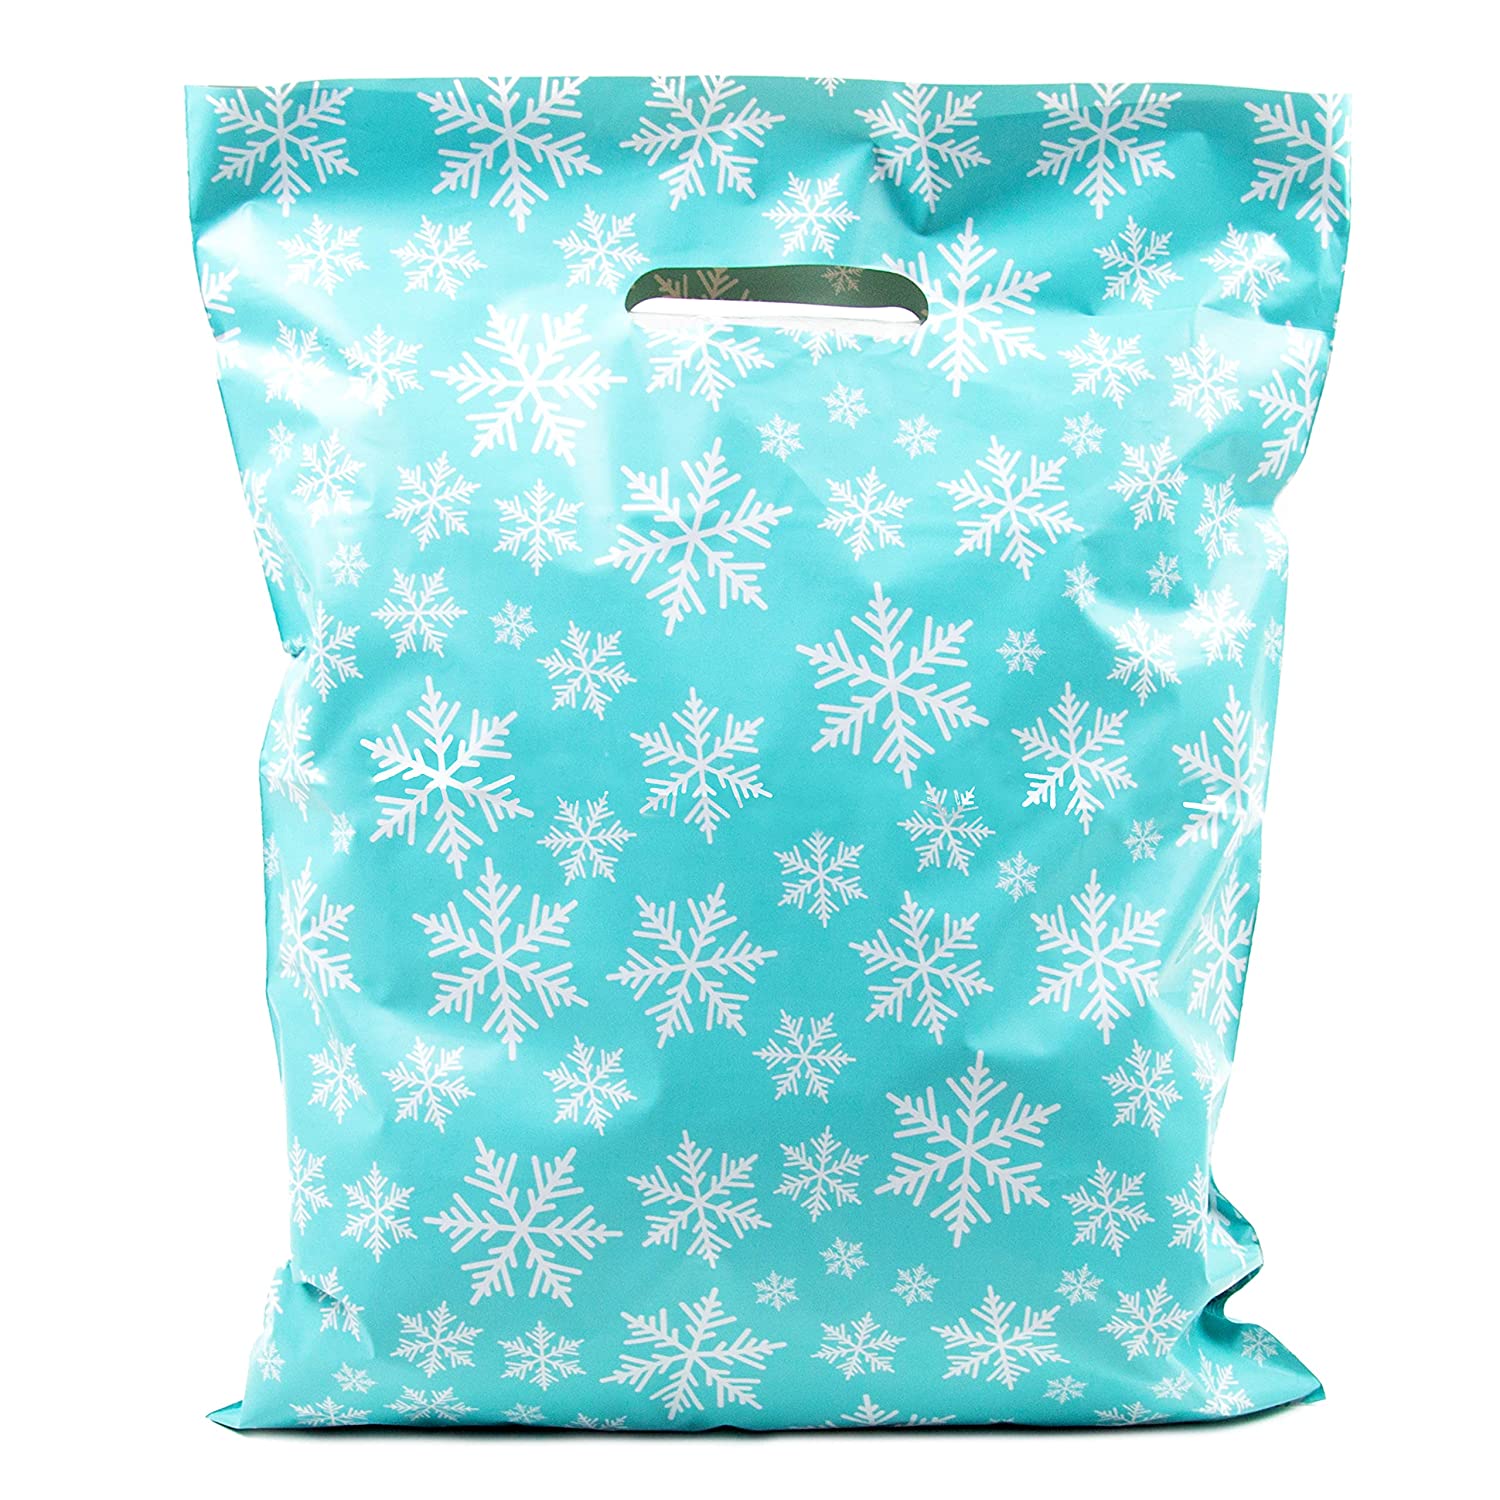 Customized blue plastic merchandise bag for gift